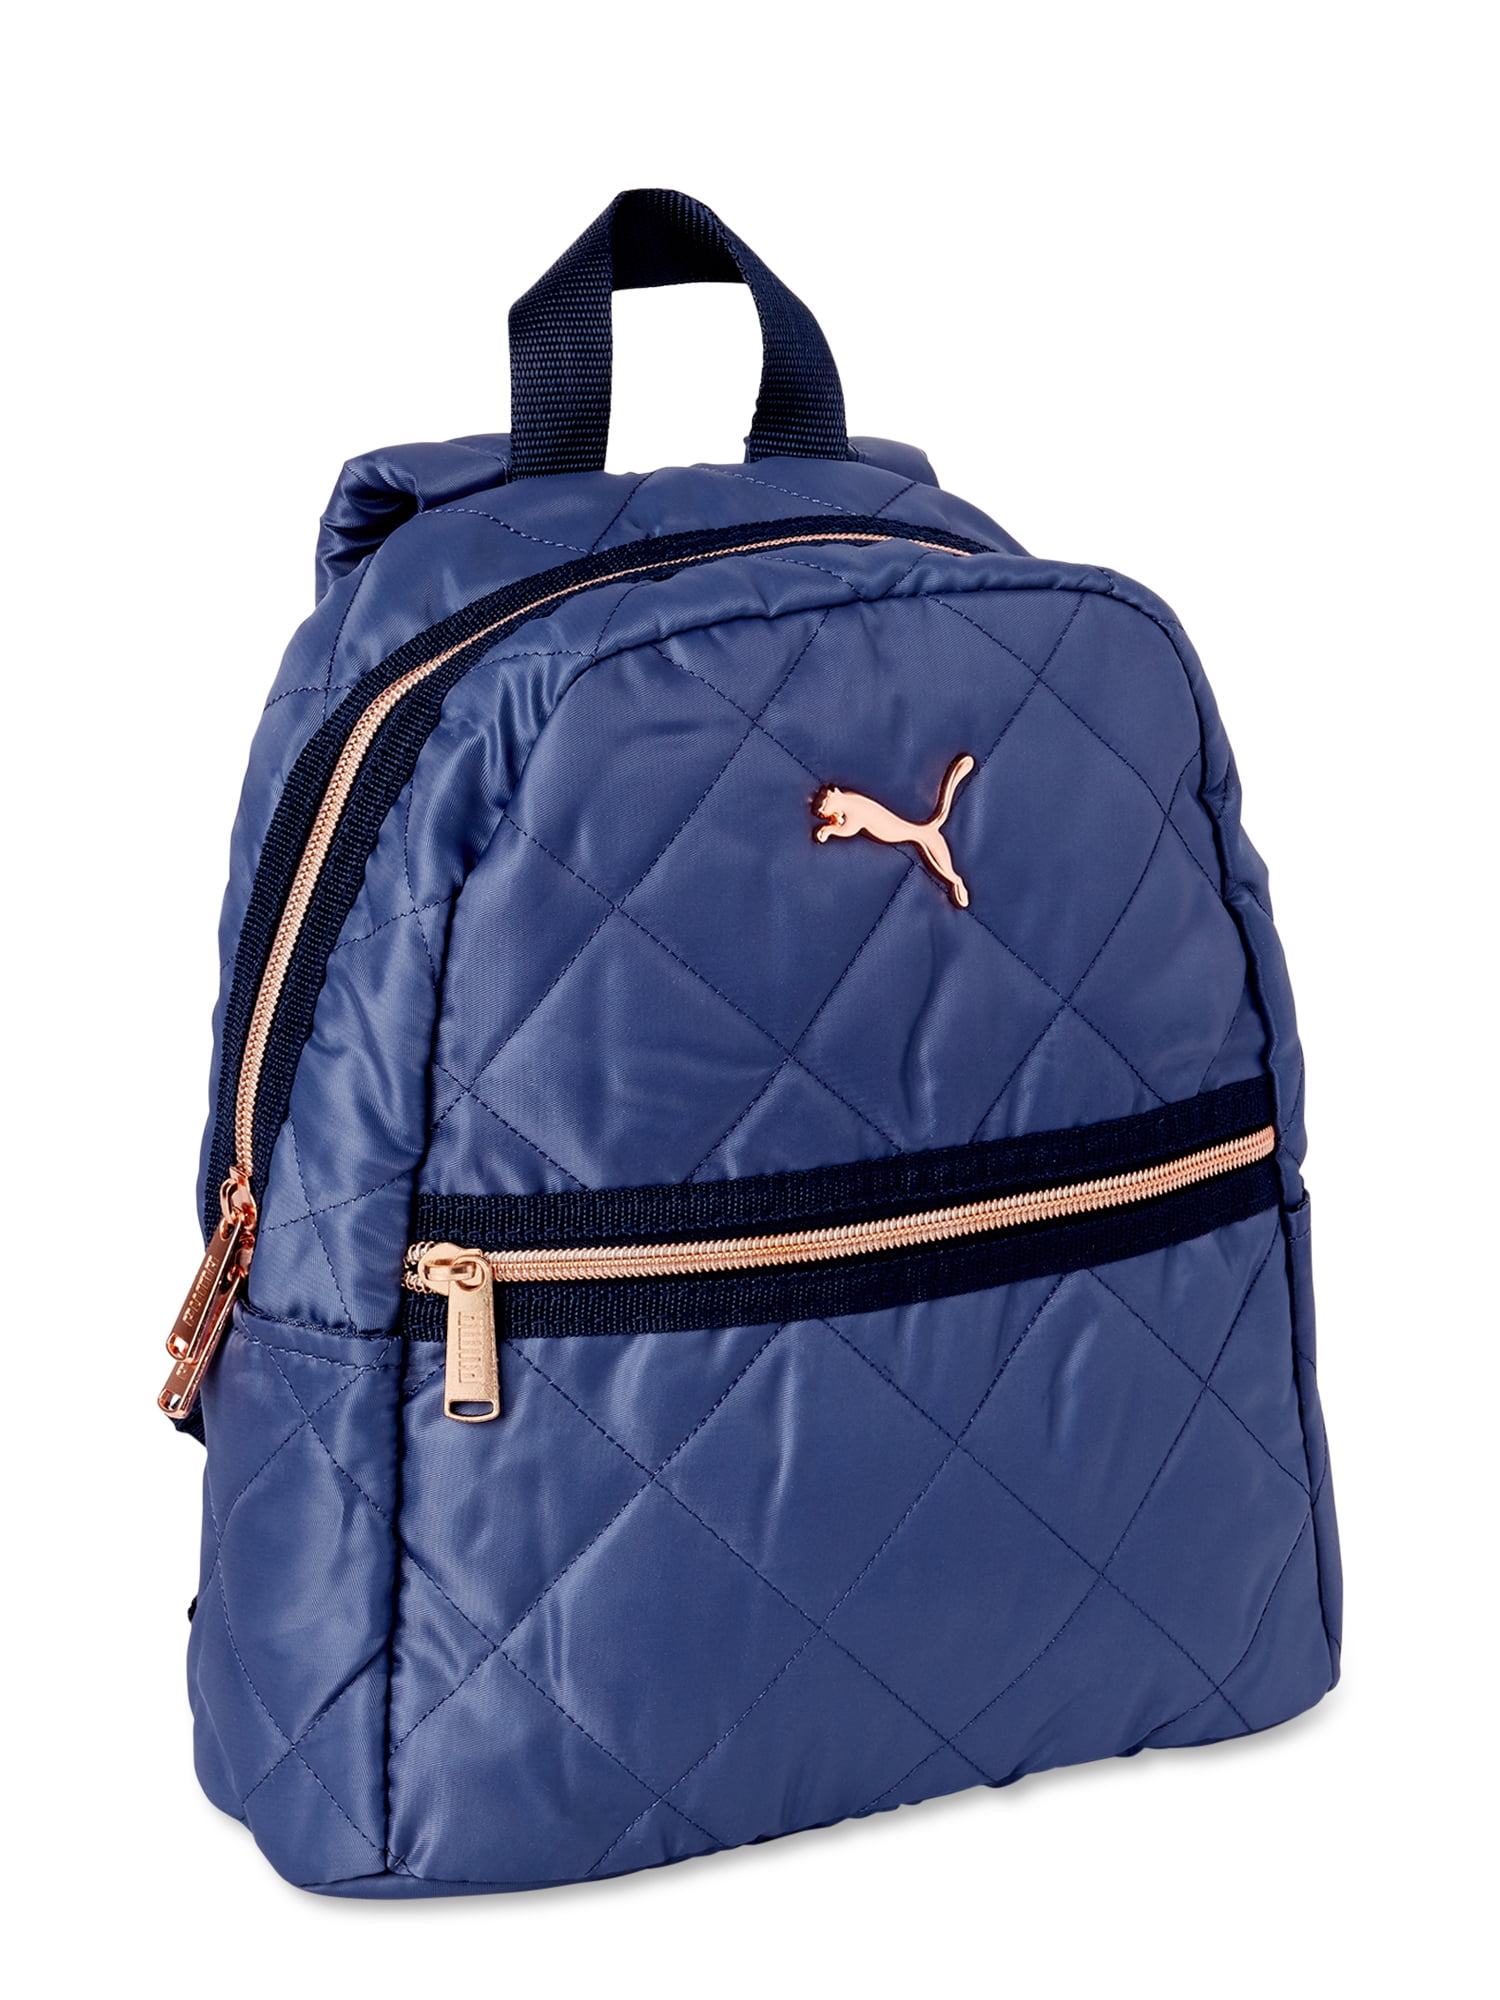 Buy Puma Unisex Blue duraBASE Backpack on Myntra | PaisaWapas.com